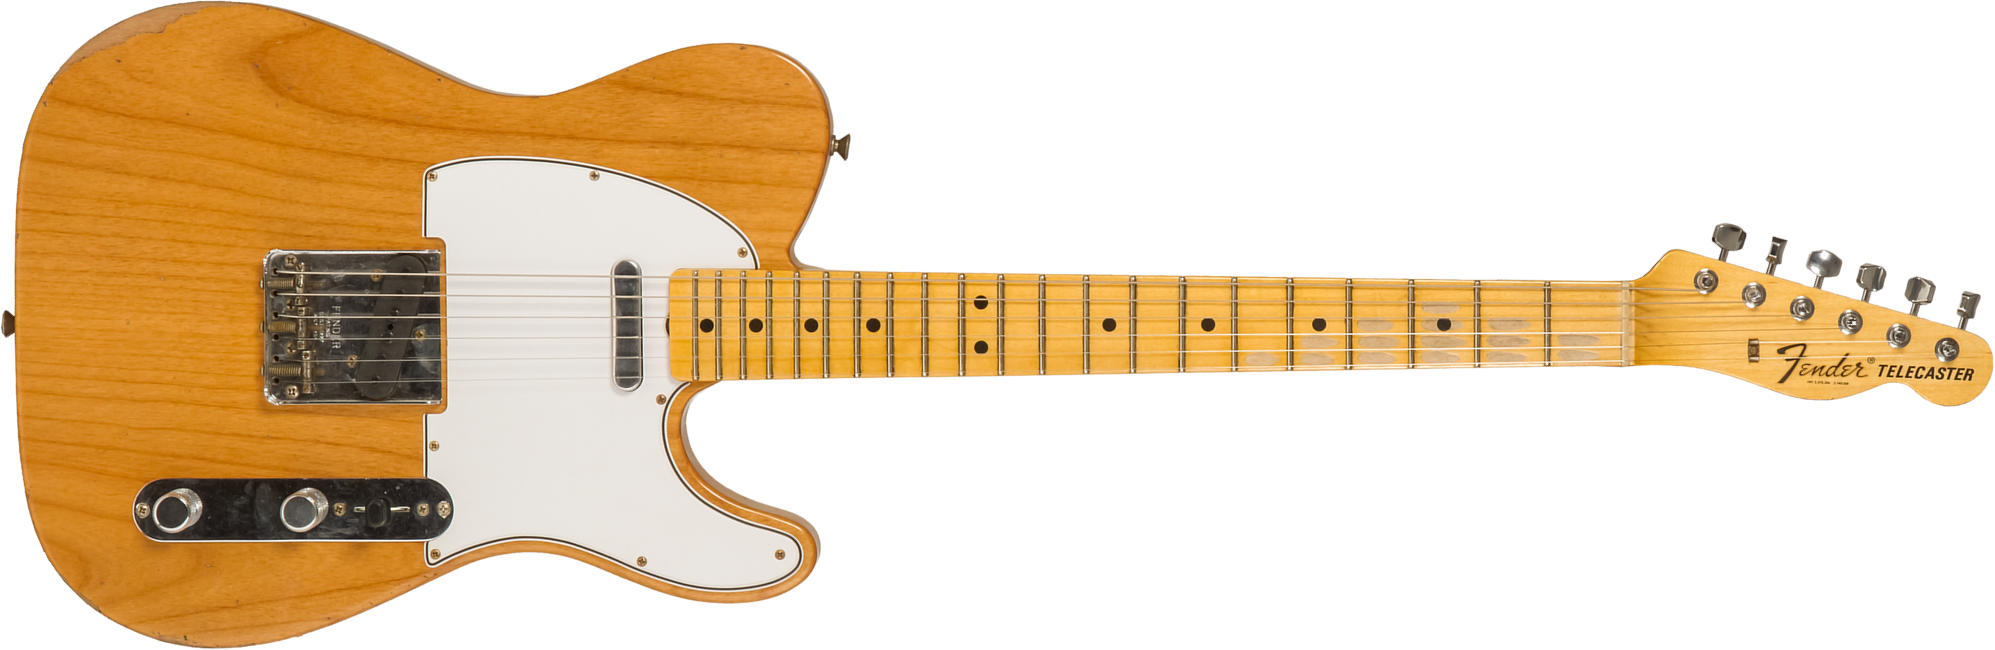 Fender Custom Shop Tele 1968 2s Ht Mn #r123298 - Relic Aged Natural - Guitarra eléctrica con forma de tel - Main picture